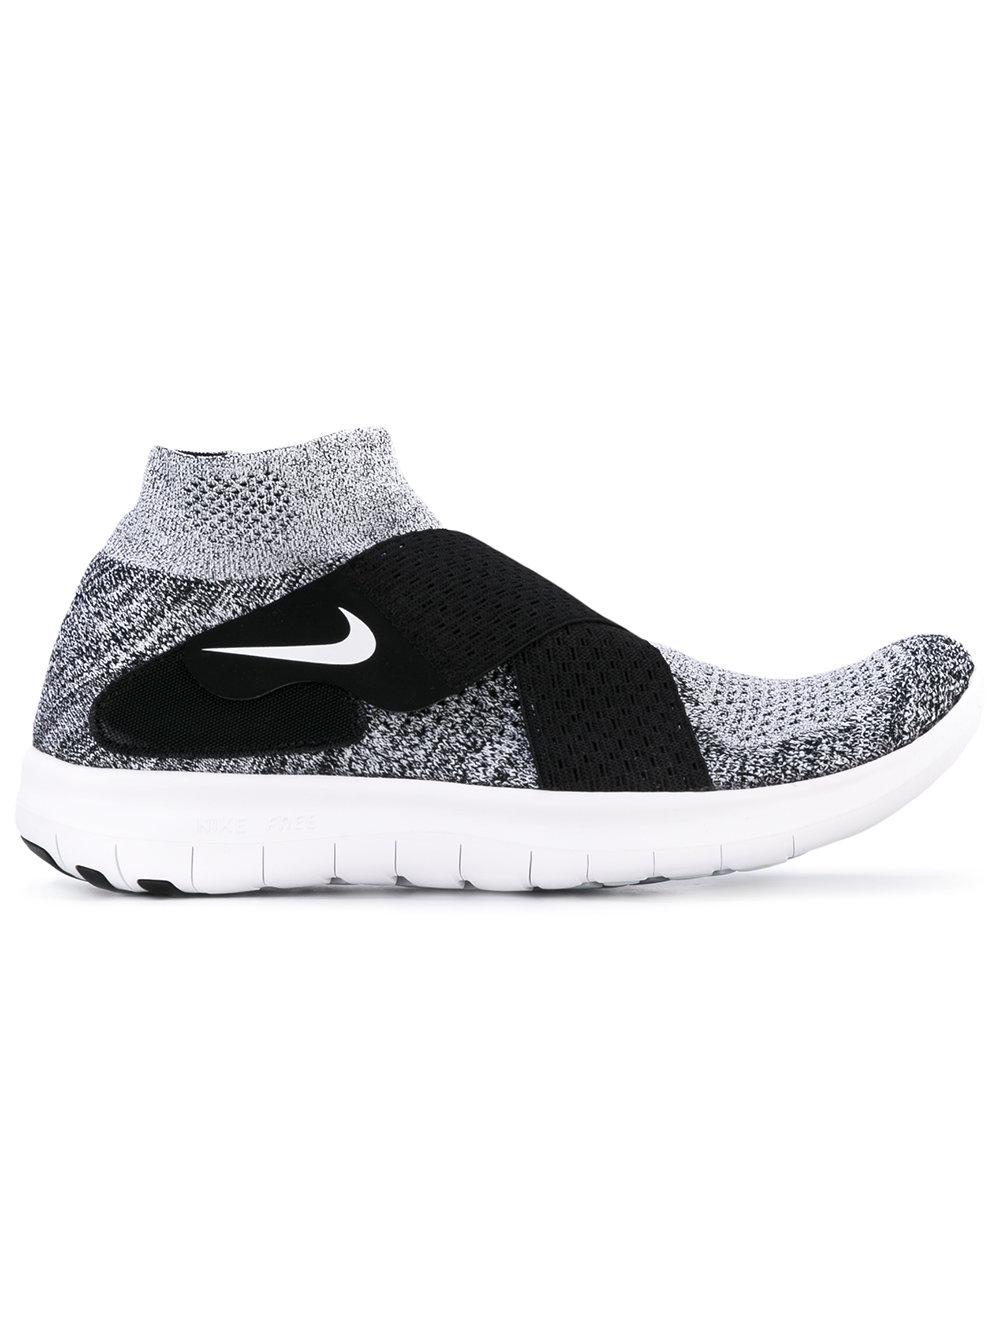 Nike Synthetic Cross Strap Sneakers in Grey (Gray) for Men - Lyst